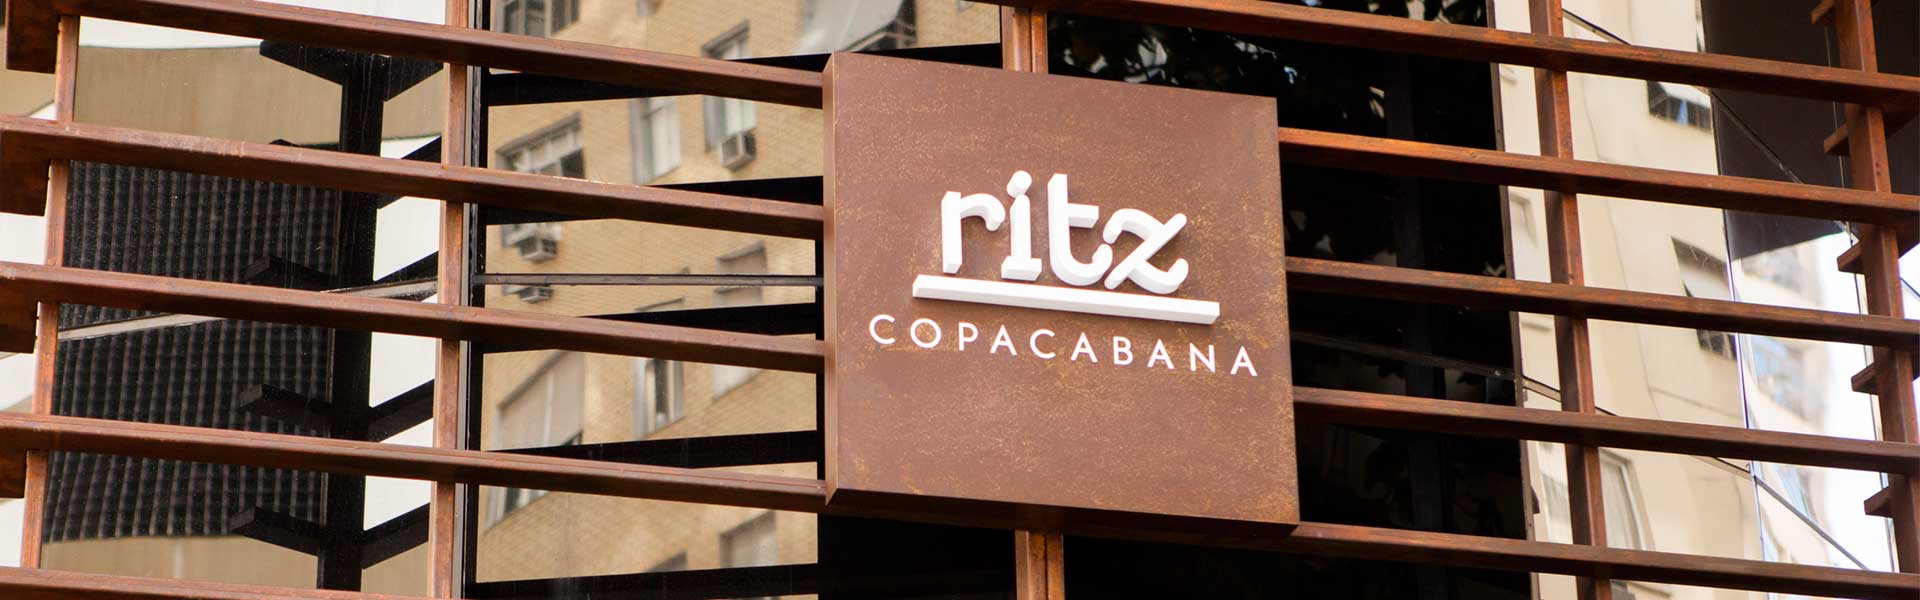 sl-interno-ritz-copacabana-hotel